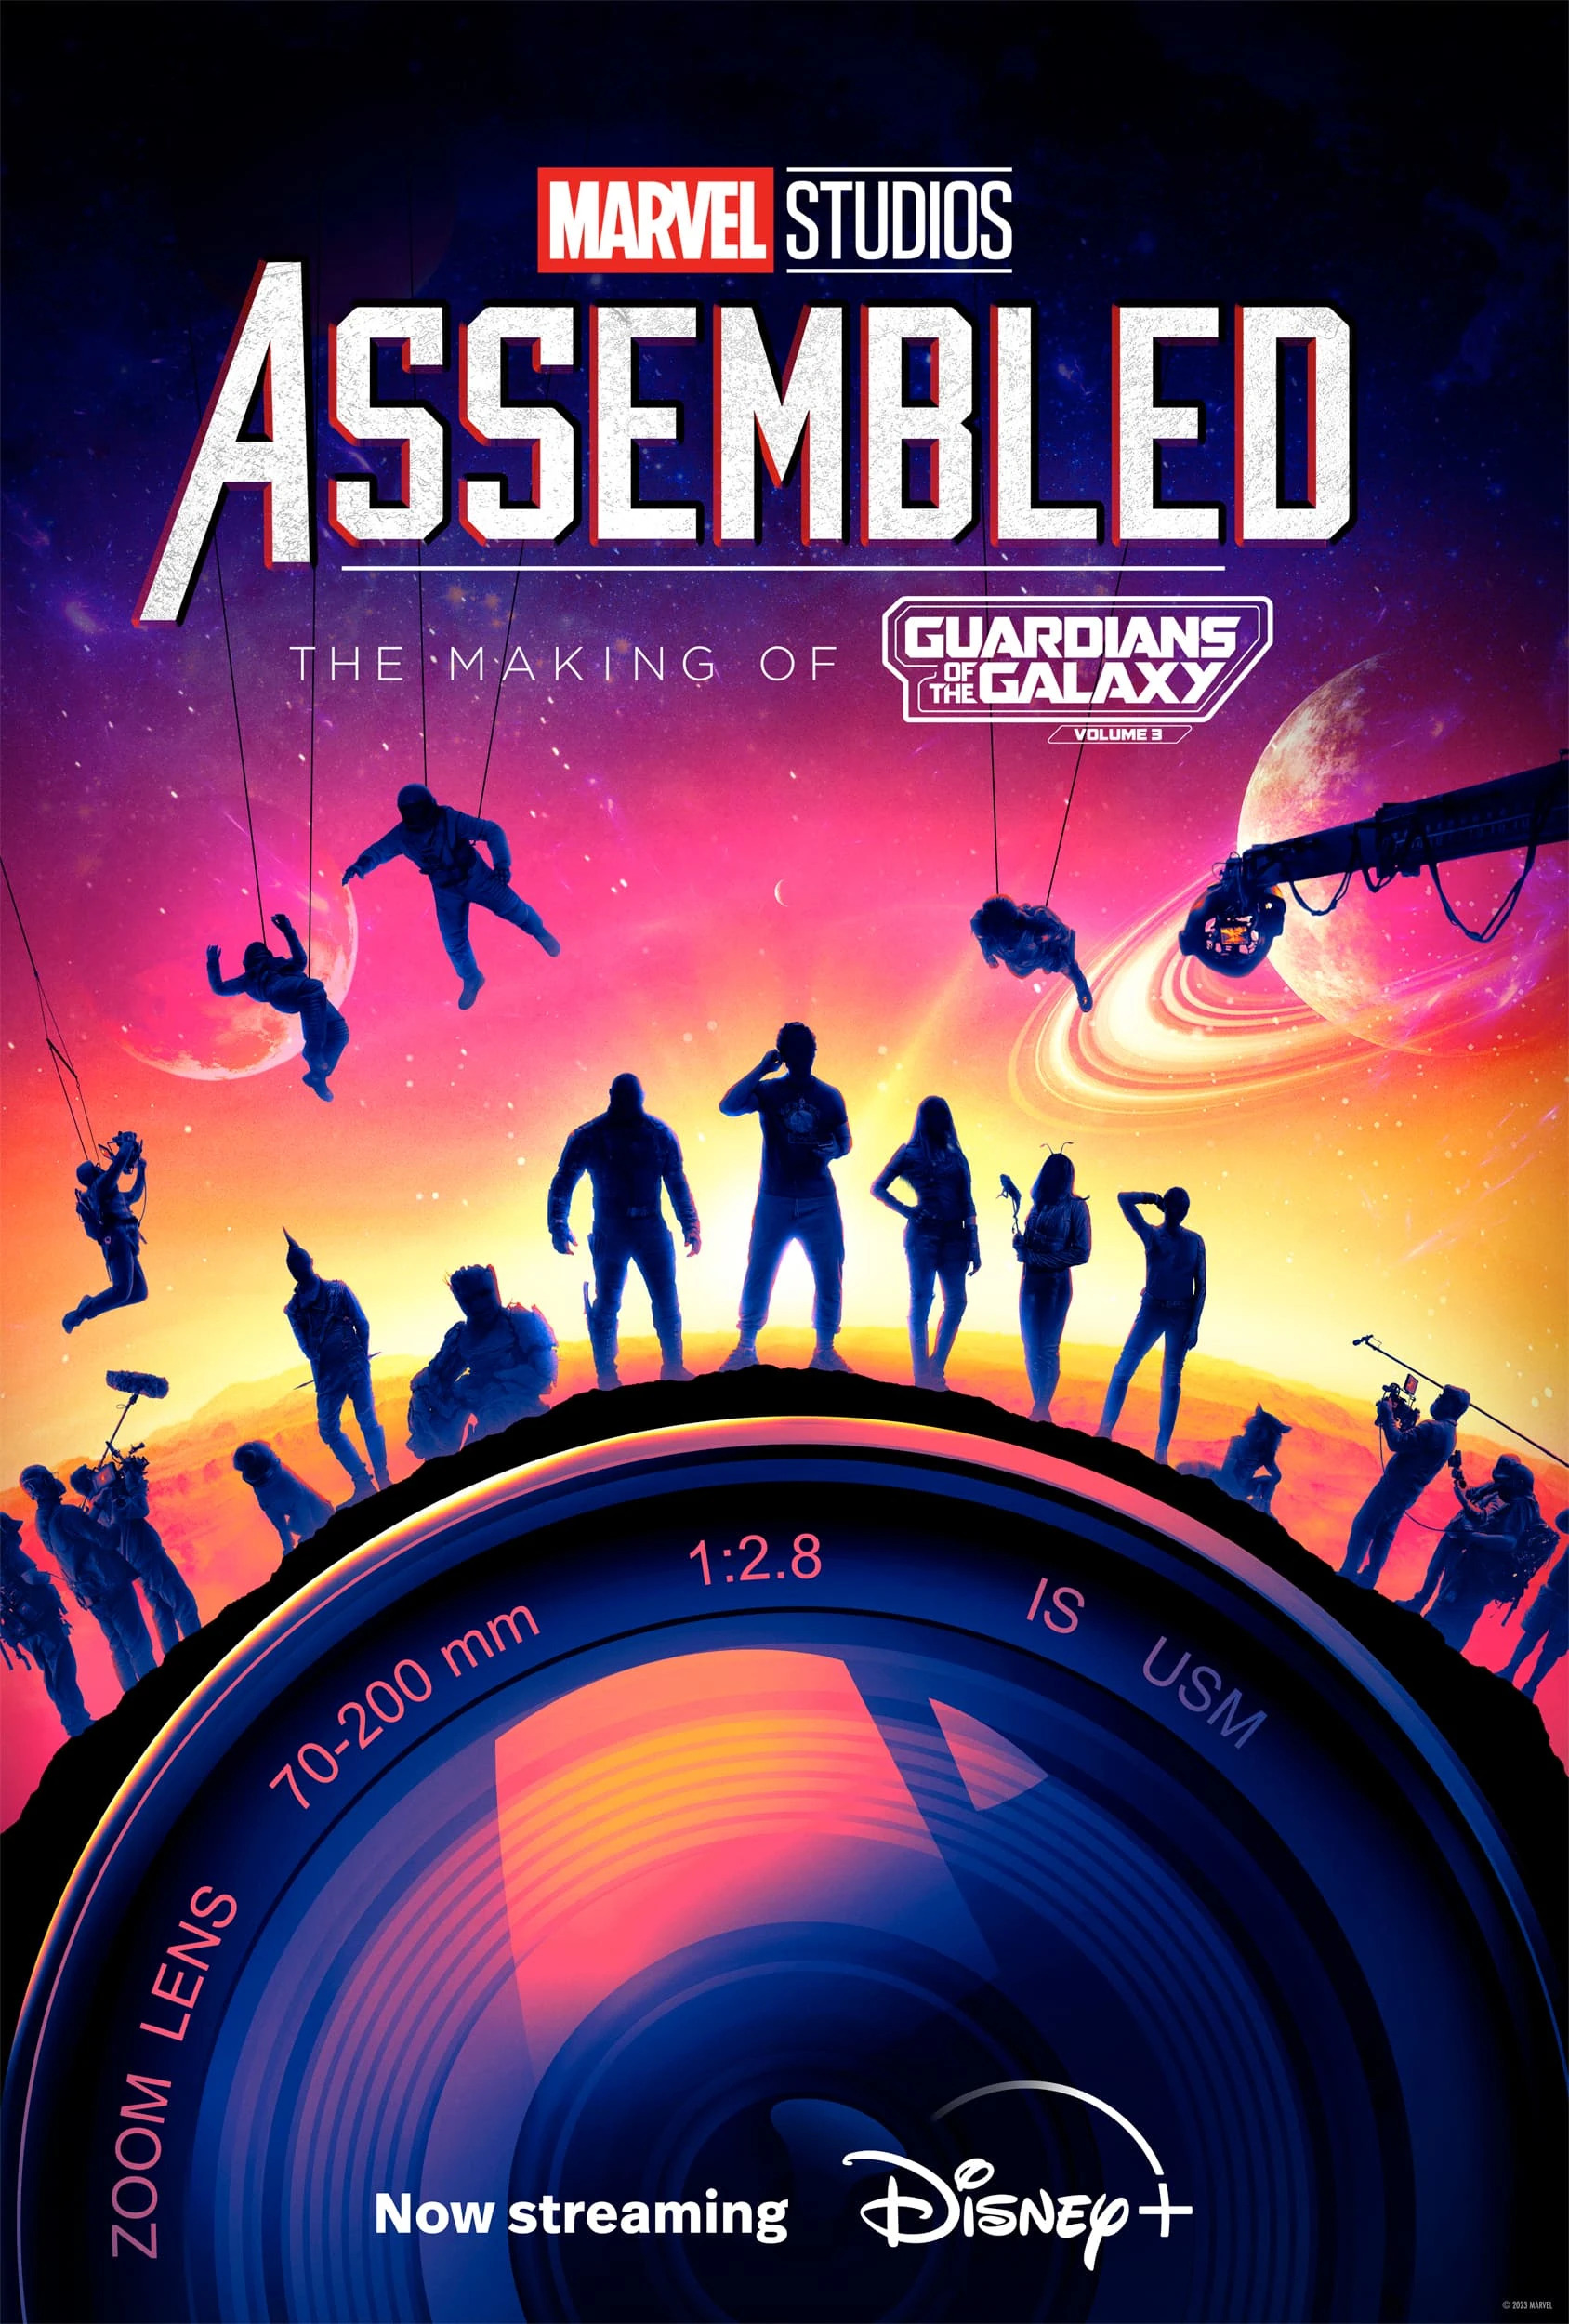 Mega Sized TV Poster Image for Marvel Studios: Assembled (#16 of 21)